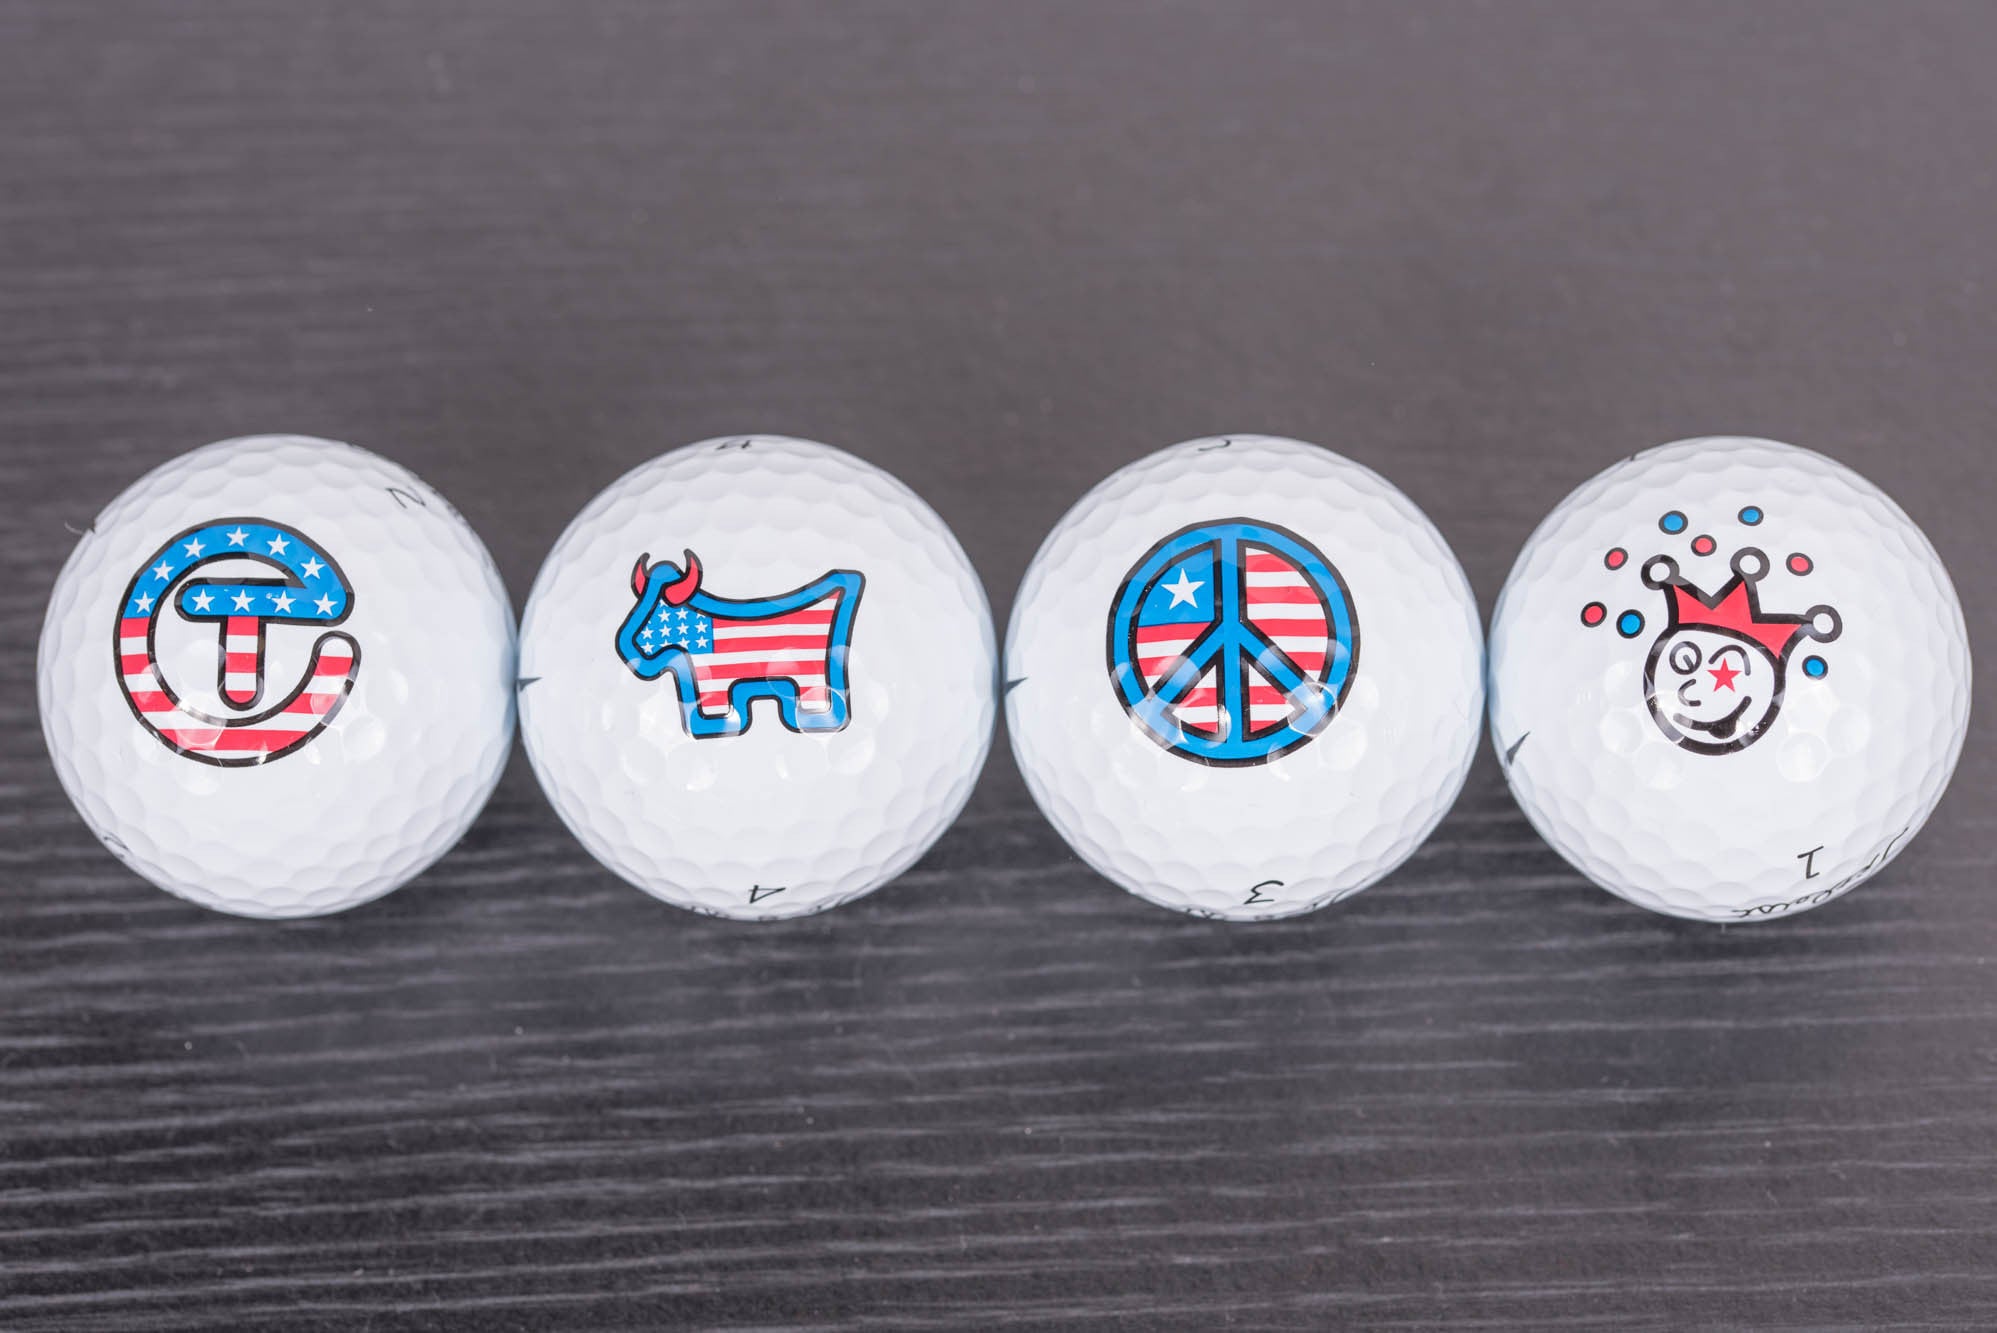 Logo balls - 2017 US Open Americana